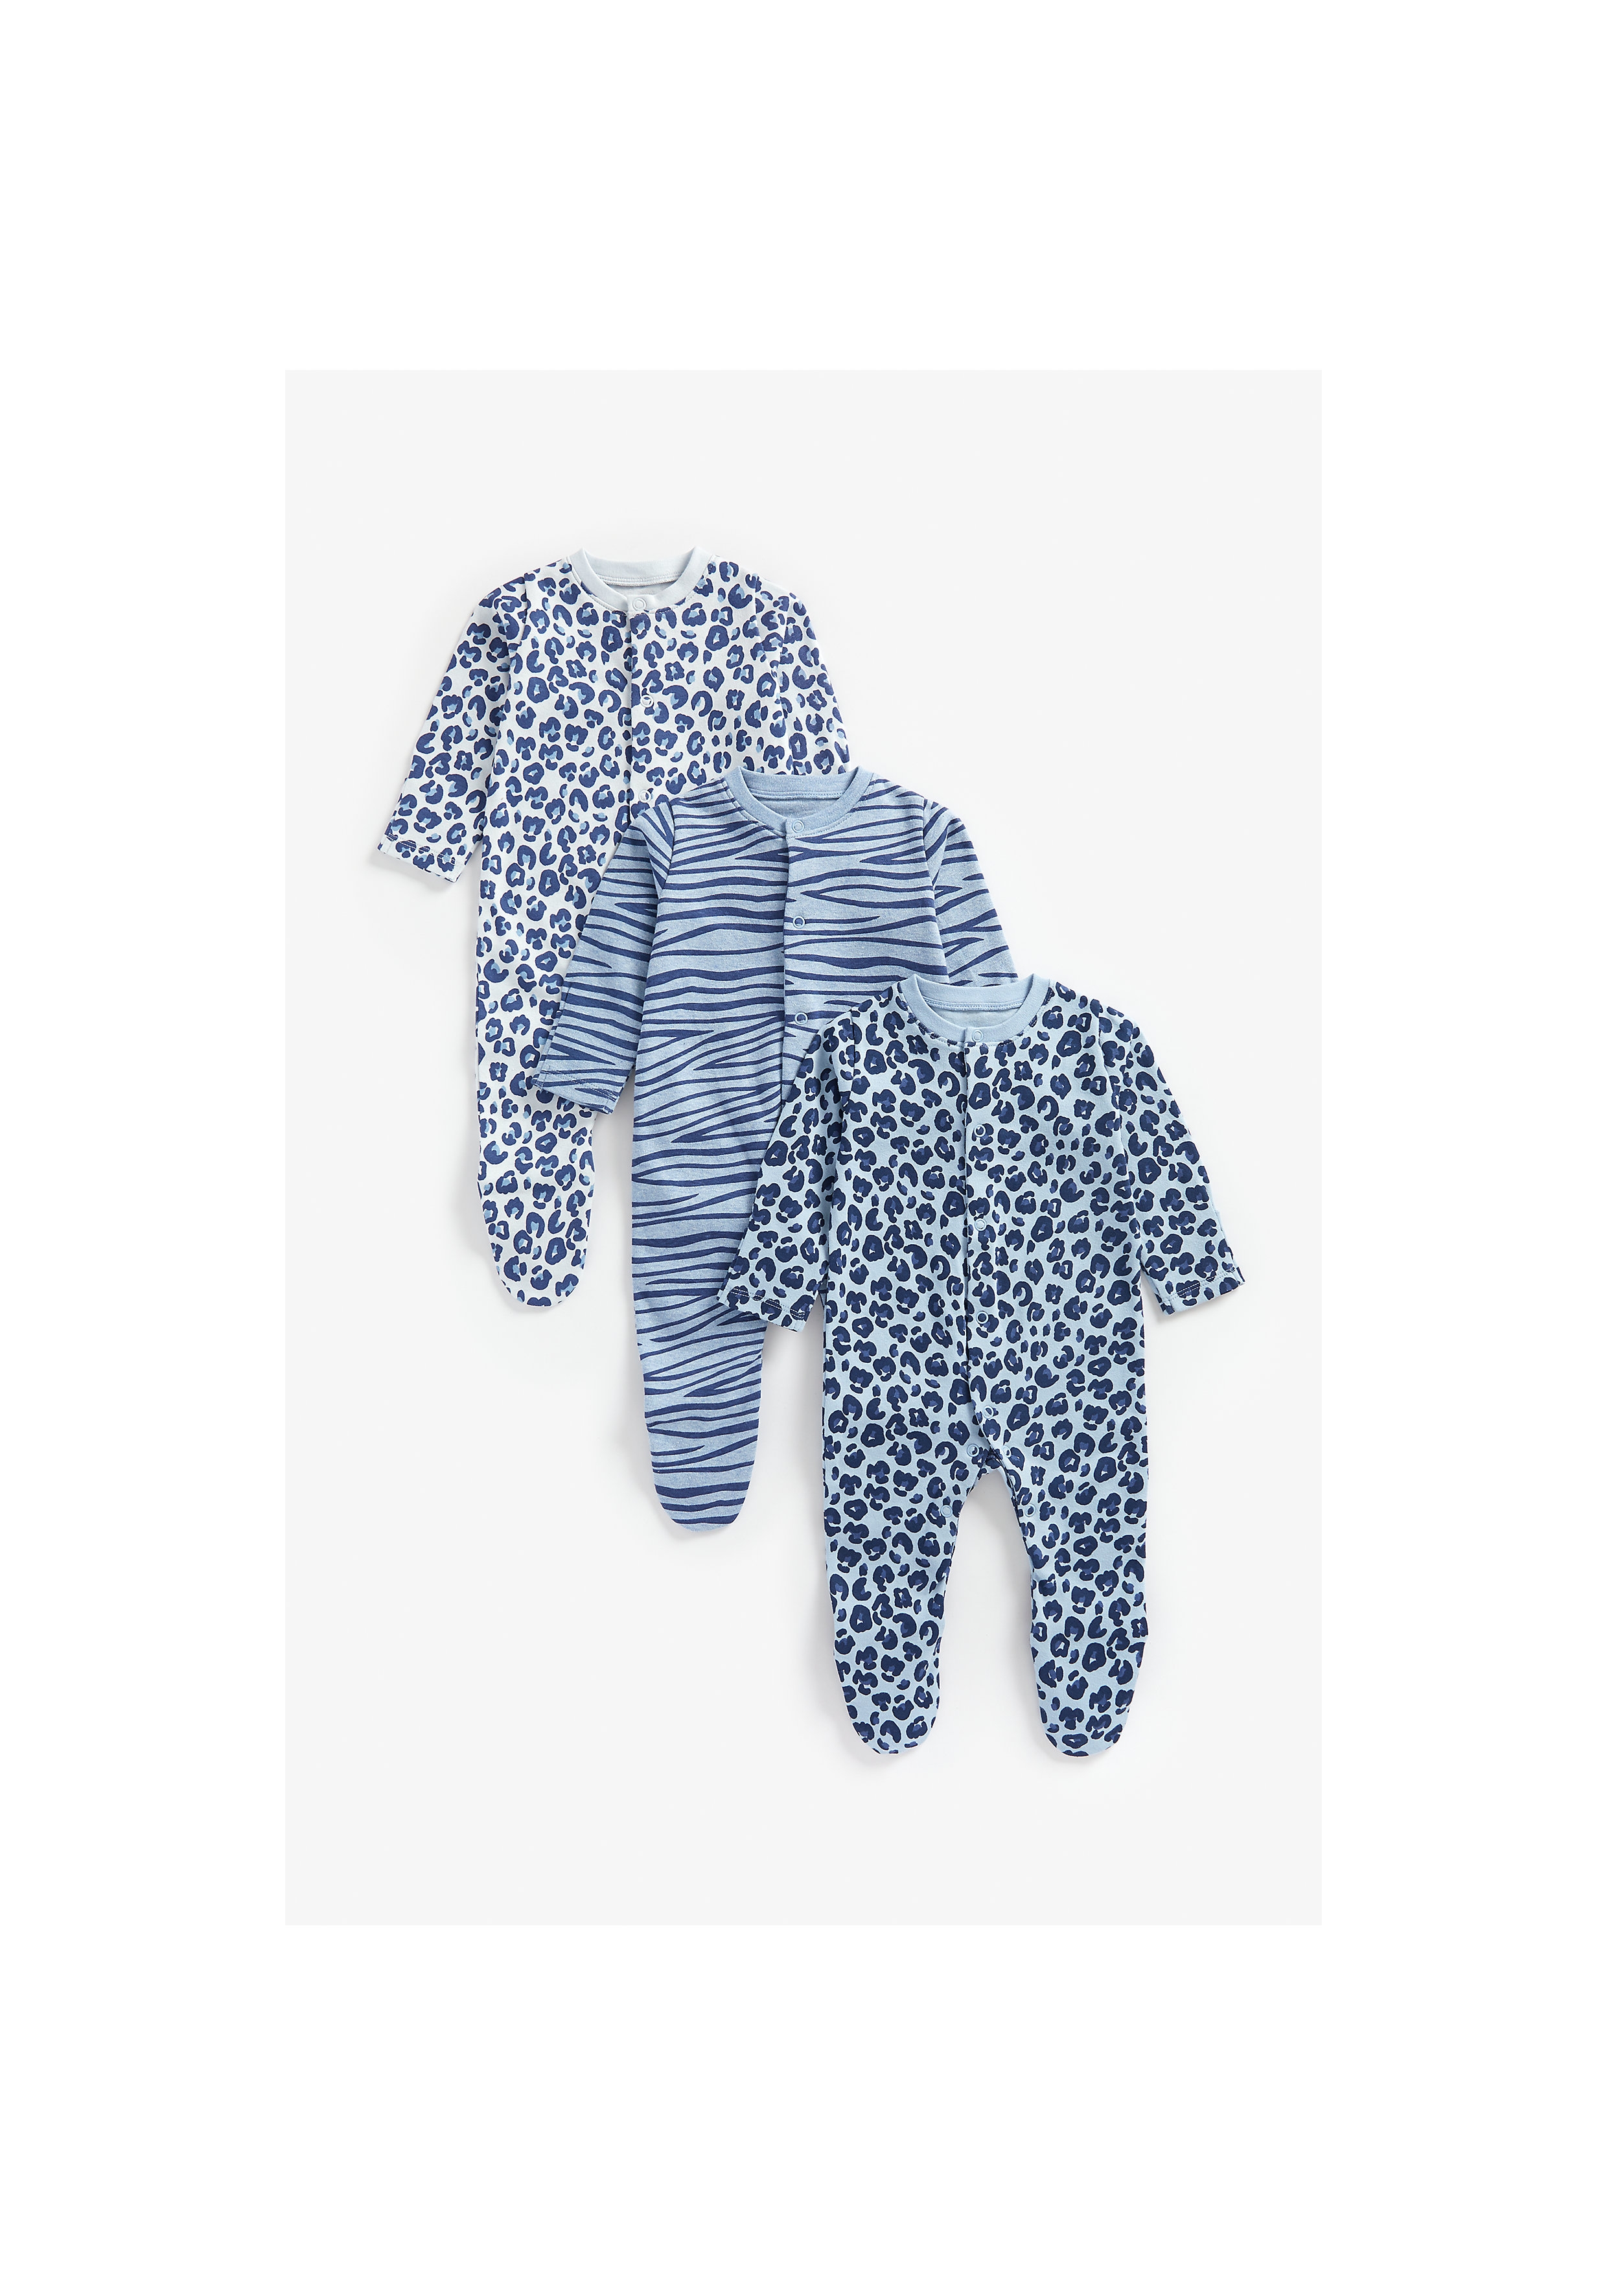 Boys Full Sleeves Sleepsuit Animal Print - Pack Of 3 - Blue